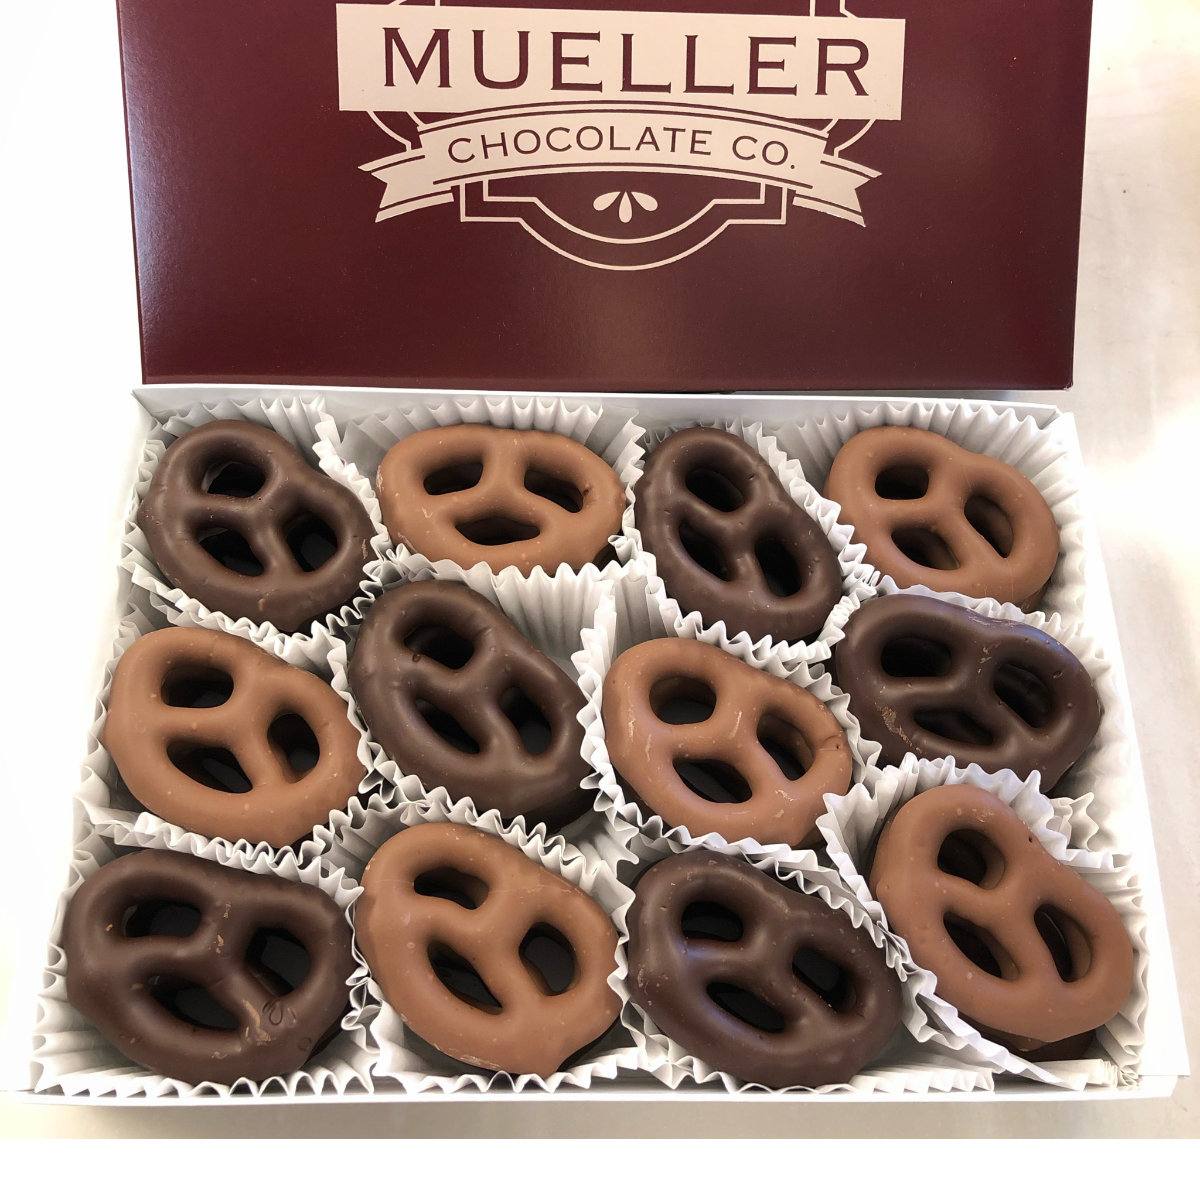 Chocolate Pretzel Party Box - Mueller Chocolate Co.